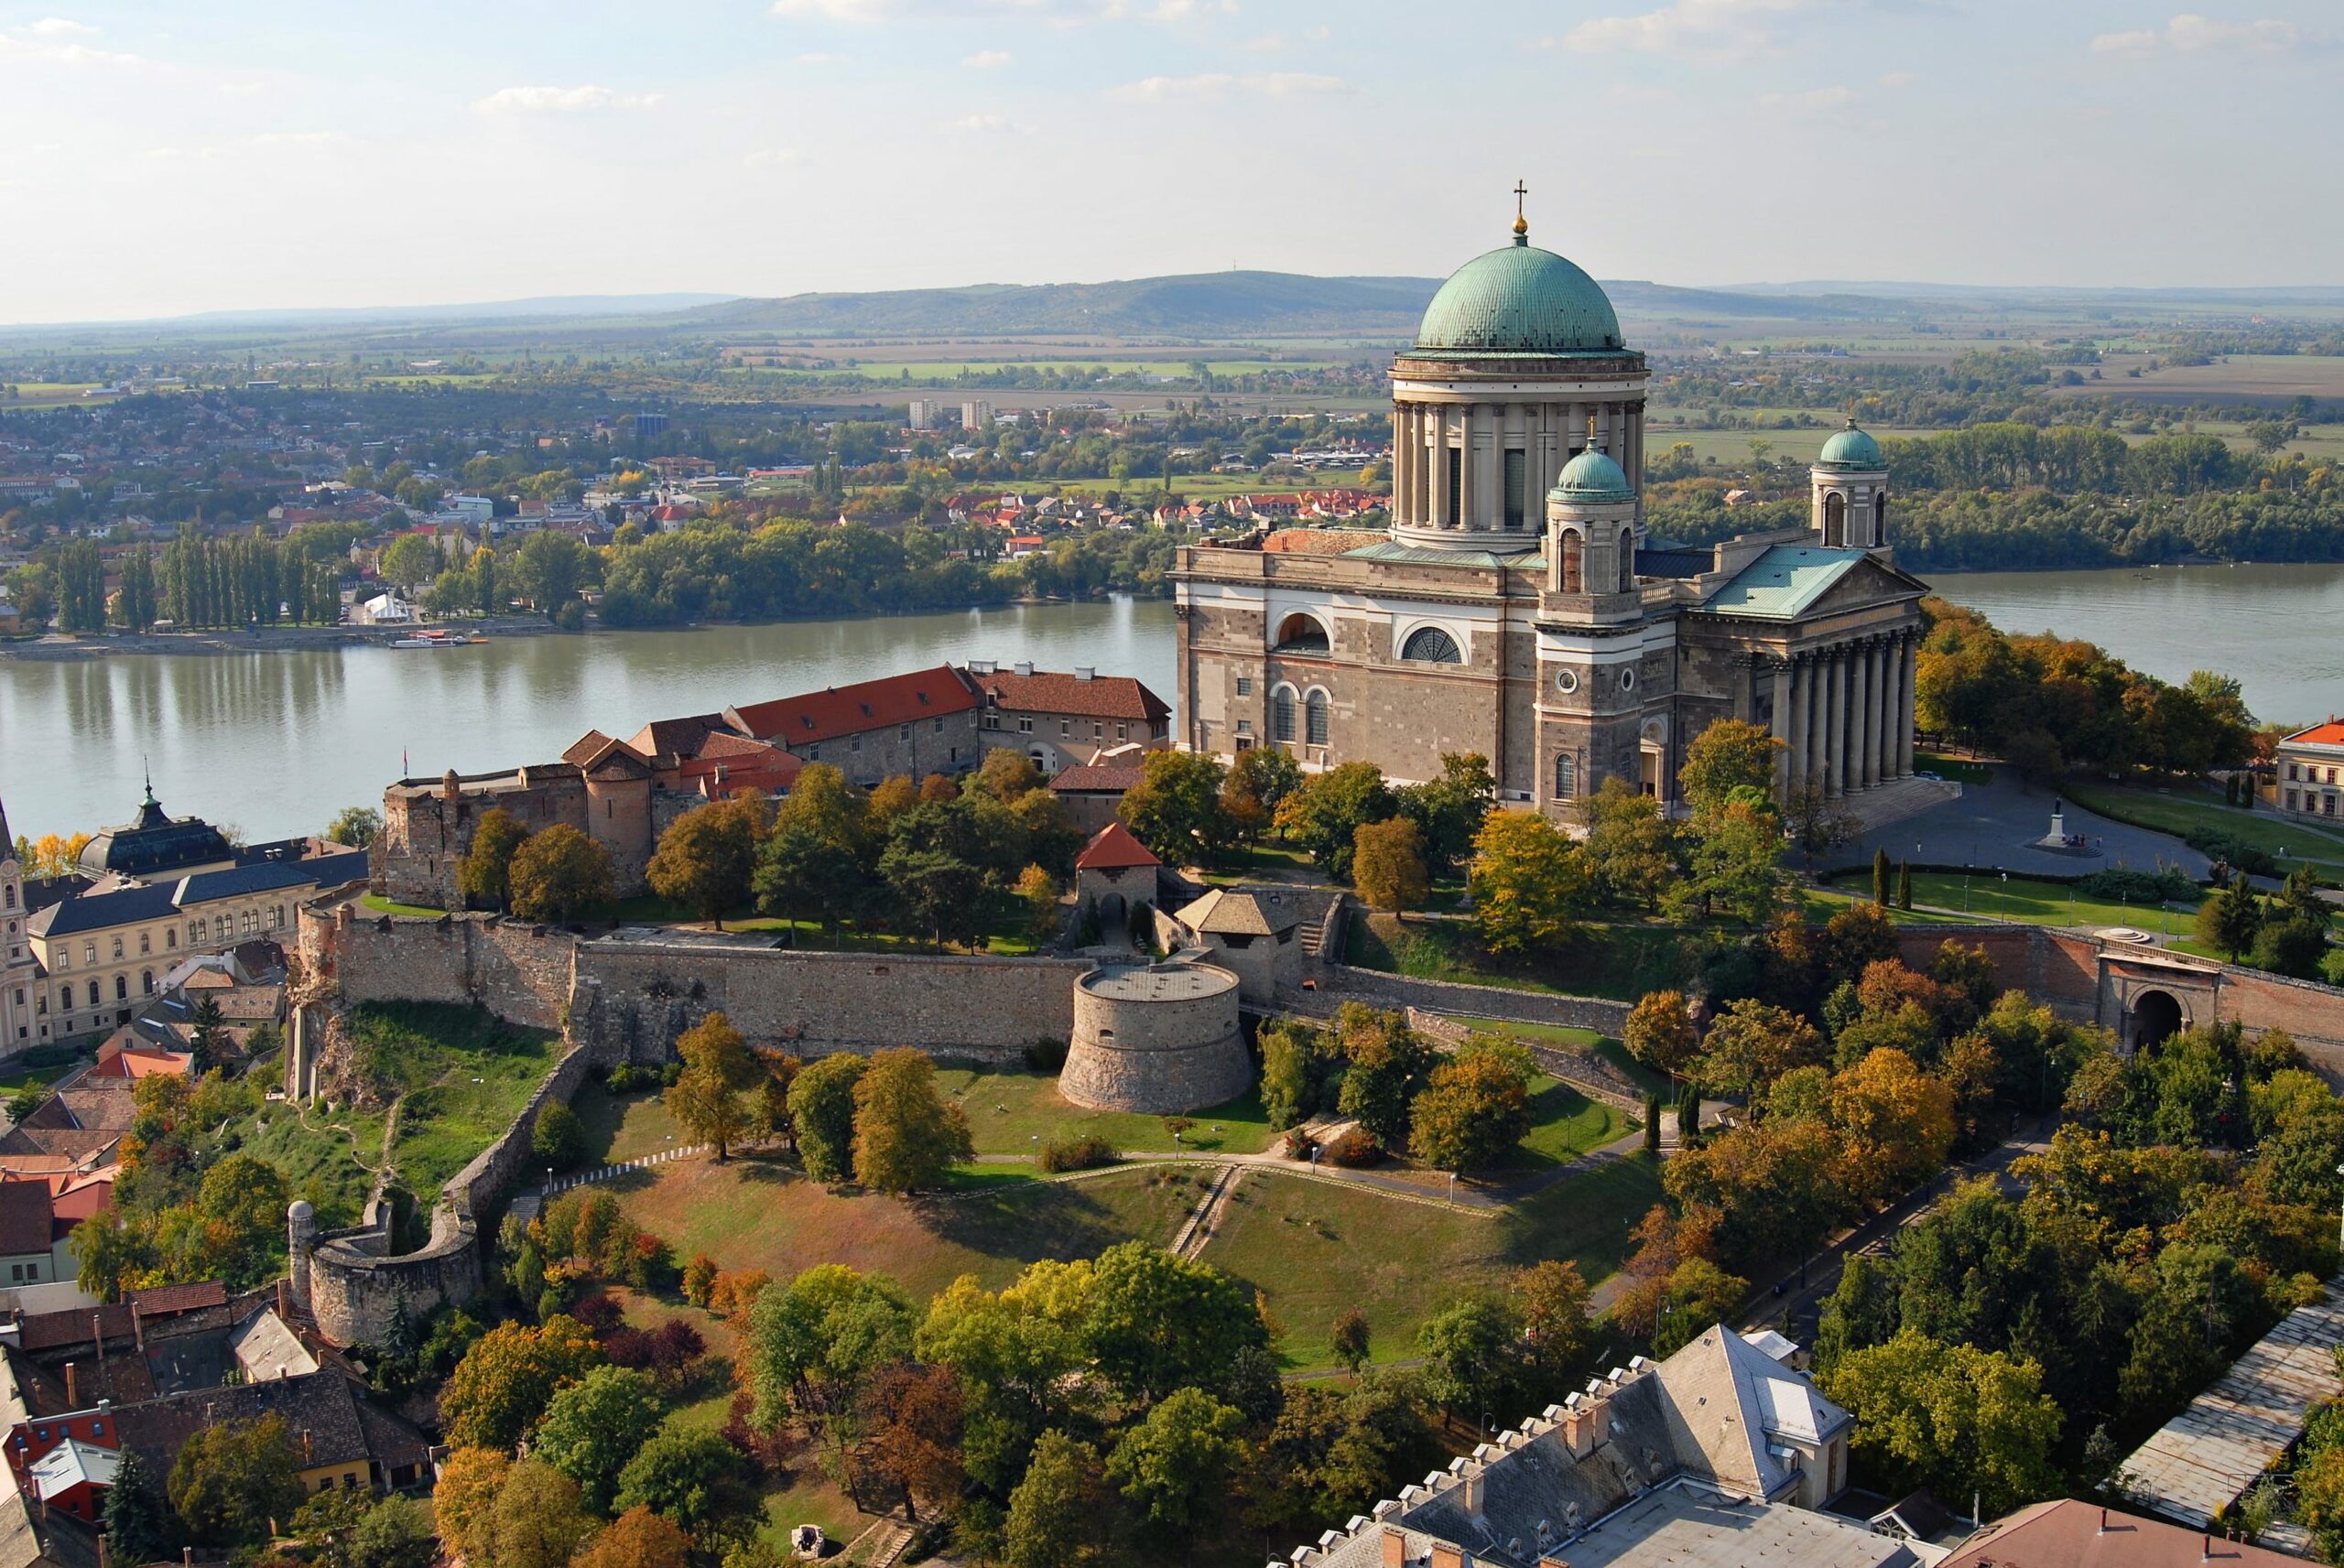 Tallest building of Hungary - Esztergom Basilica